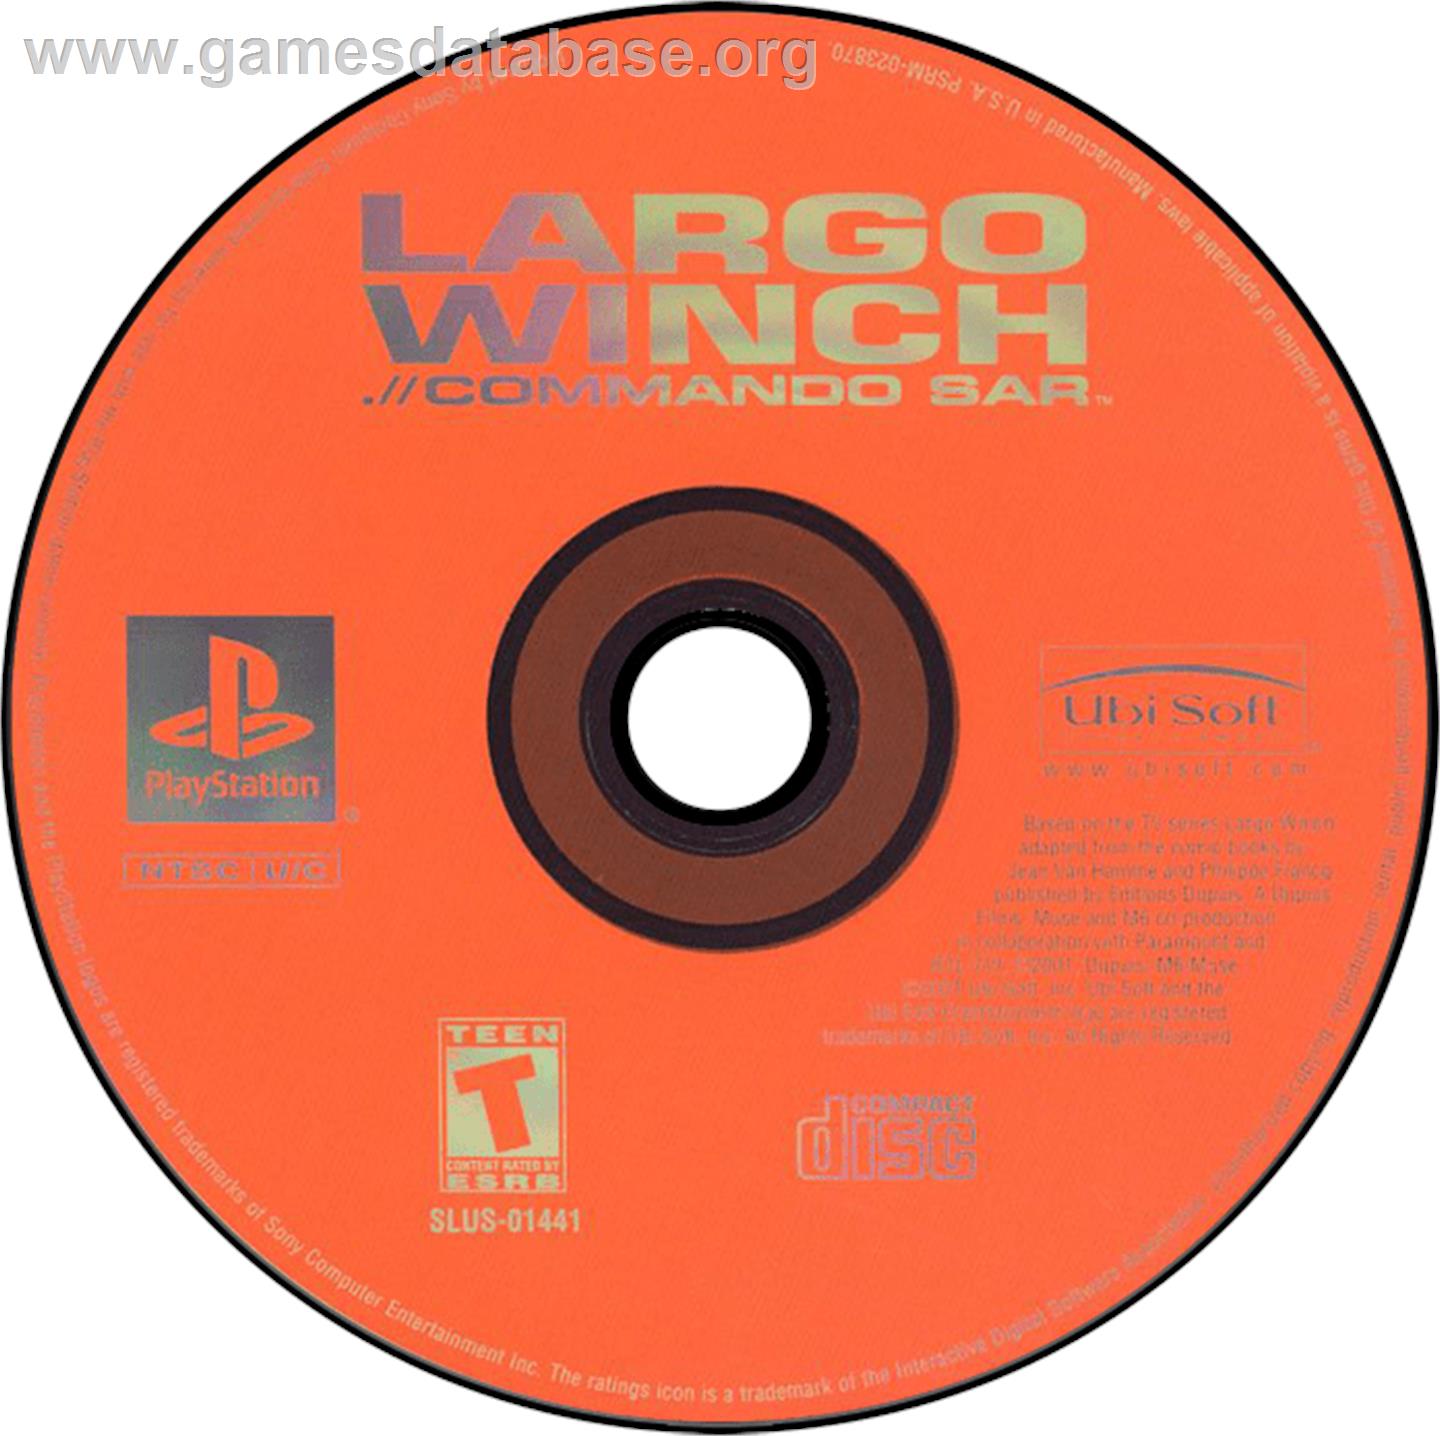 Largo Winch .// Commando SAR - Sony Playstation - Artwork - Disc